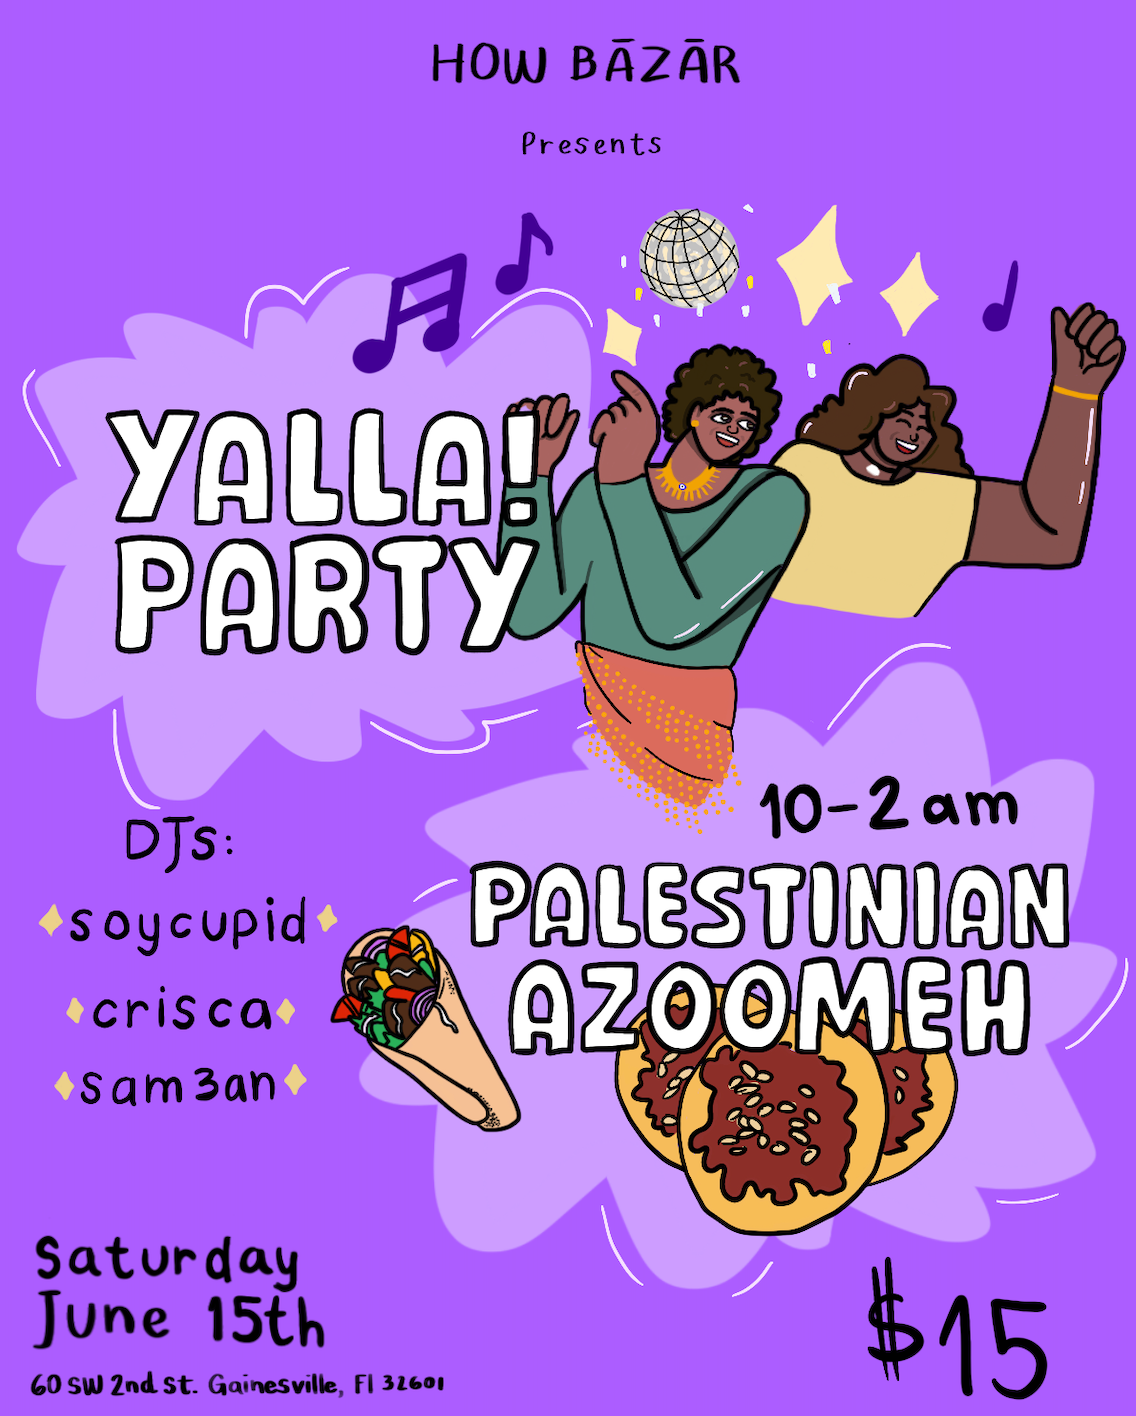 Yalla! Party